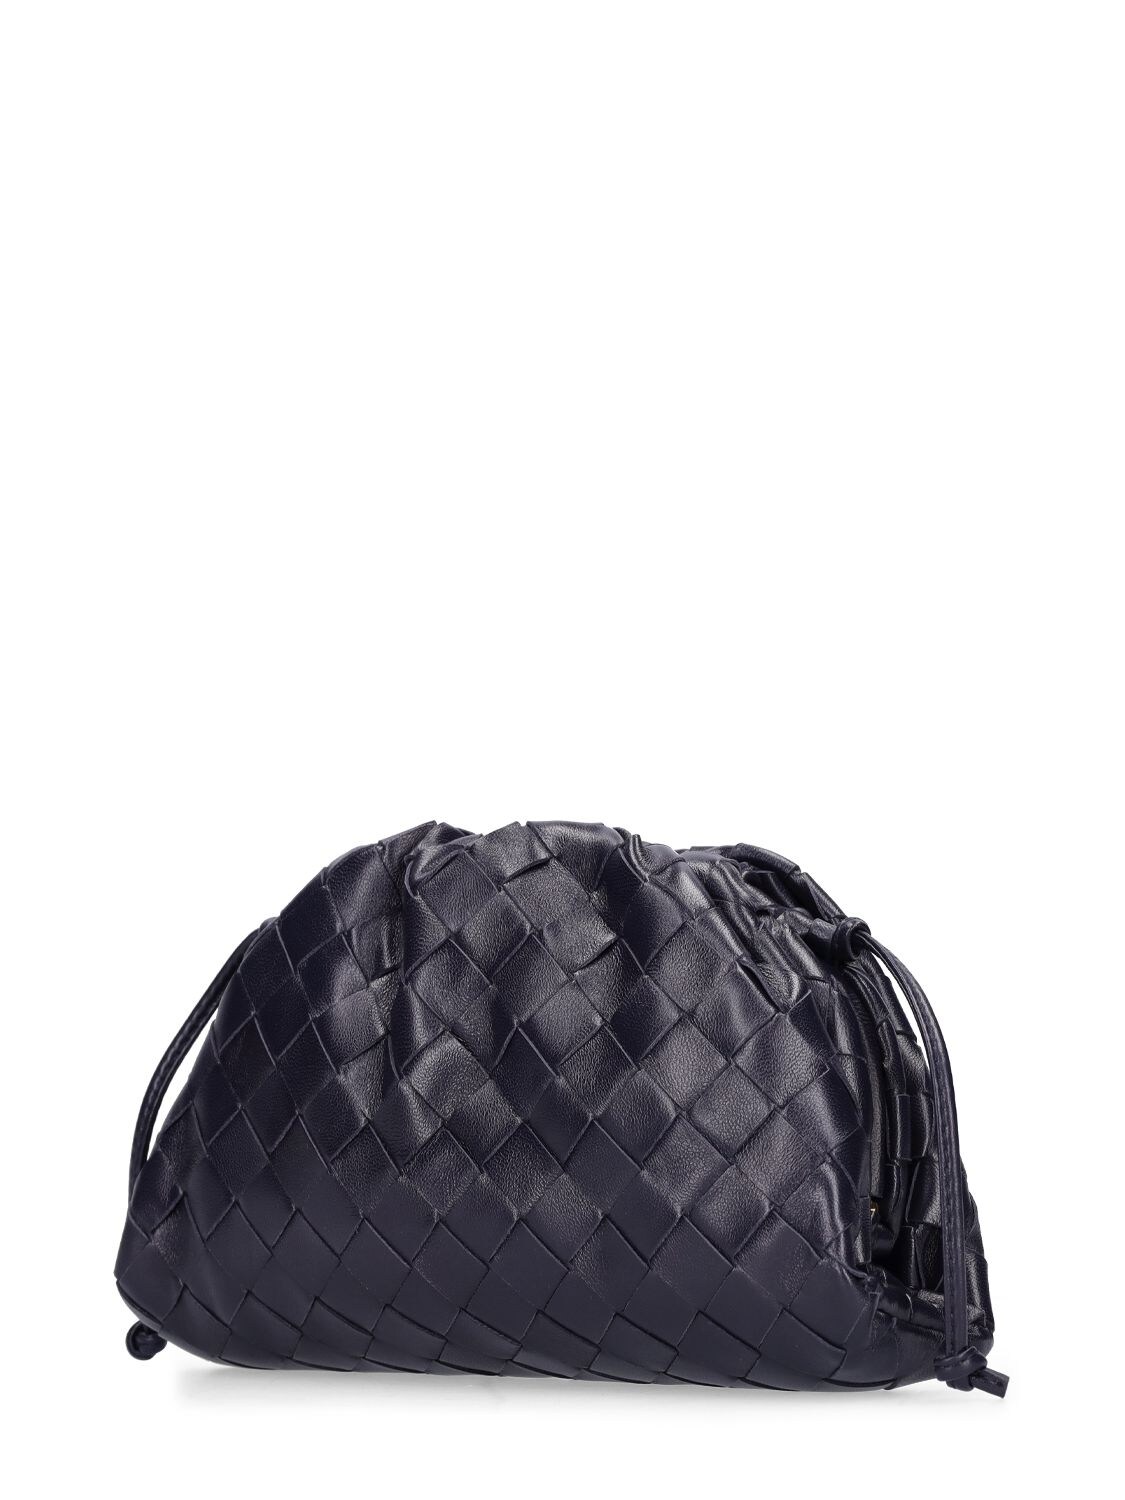 Bottega Veneta The Mini Pouch Bag in Black Leather Intrecciato